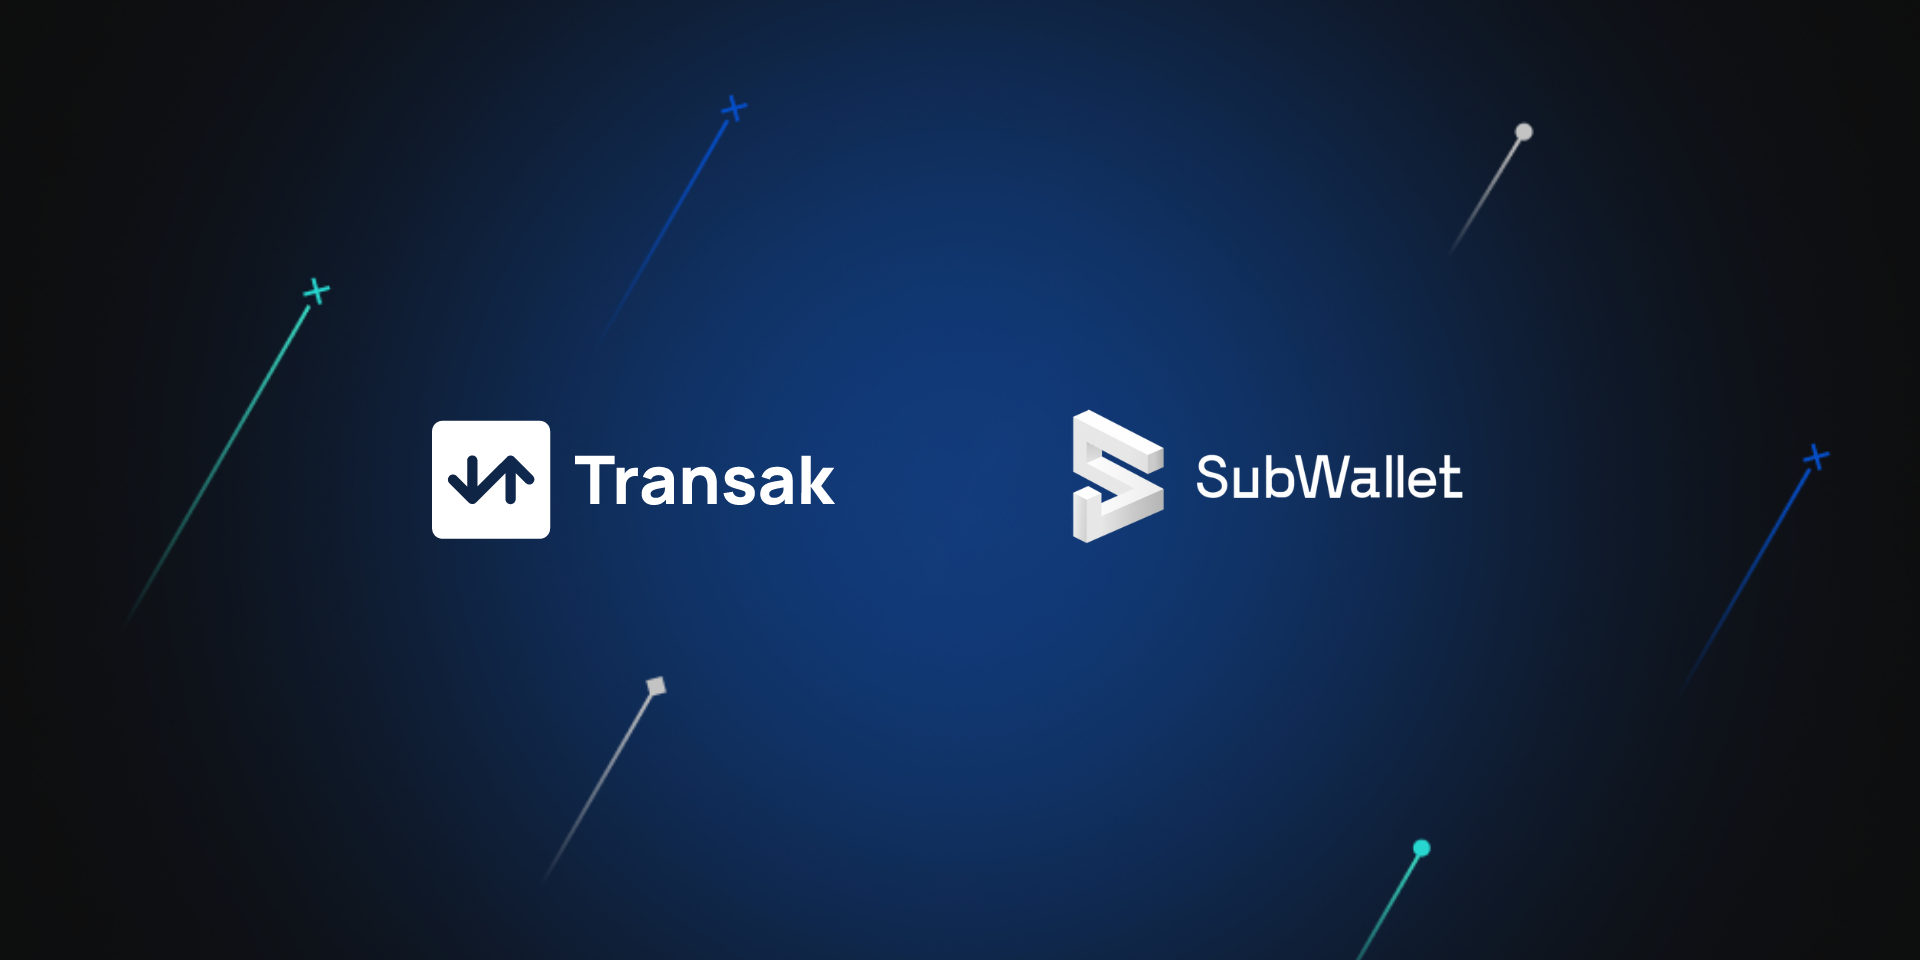 SubWallet integrates Transak to onboard users to Polkadot and Kusama